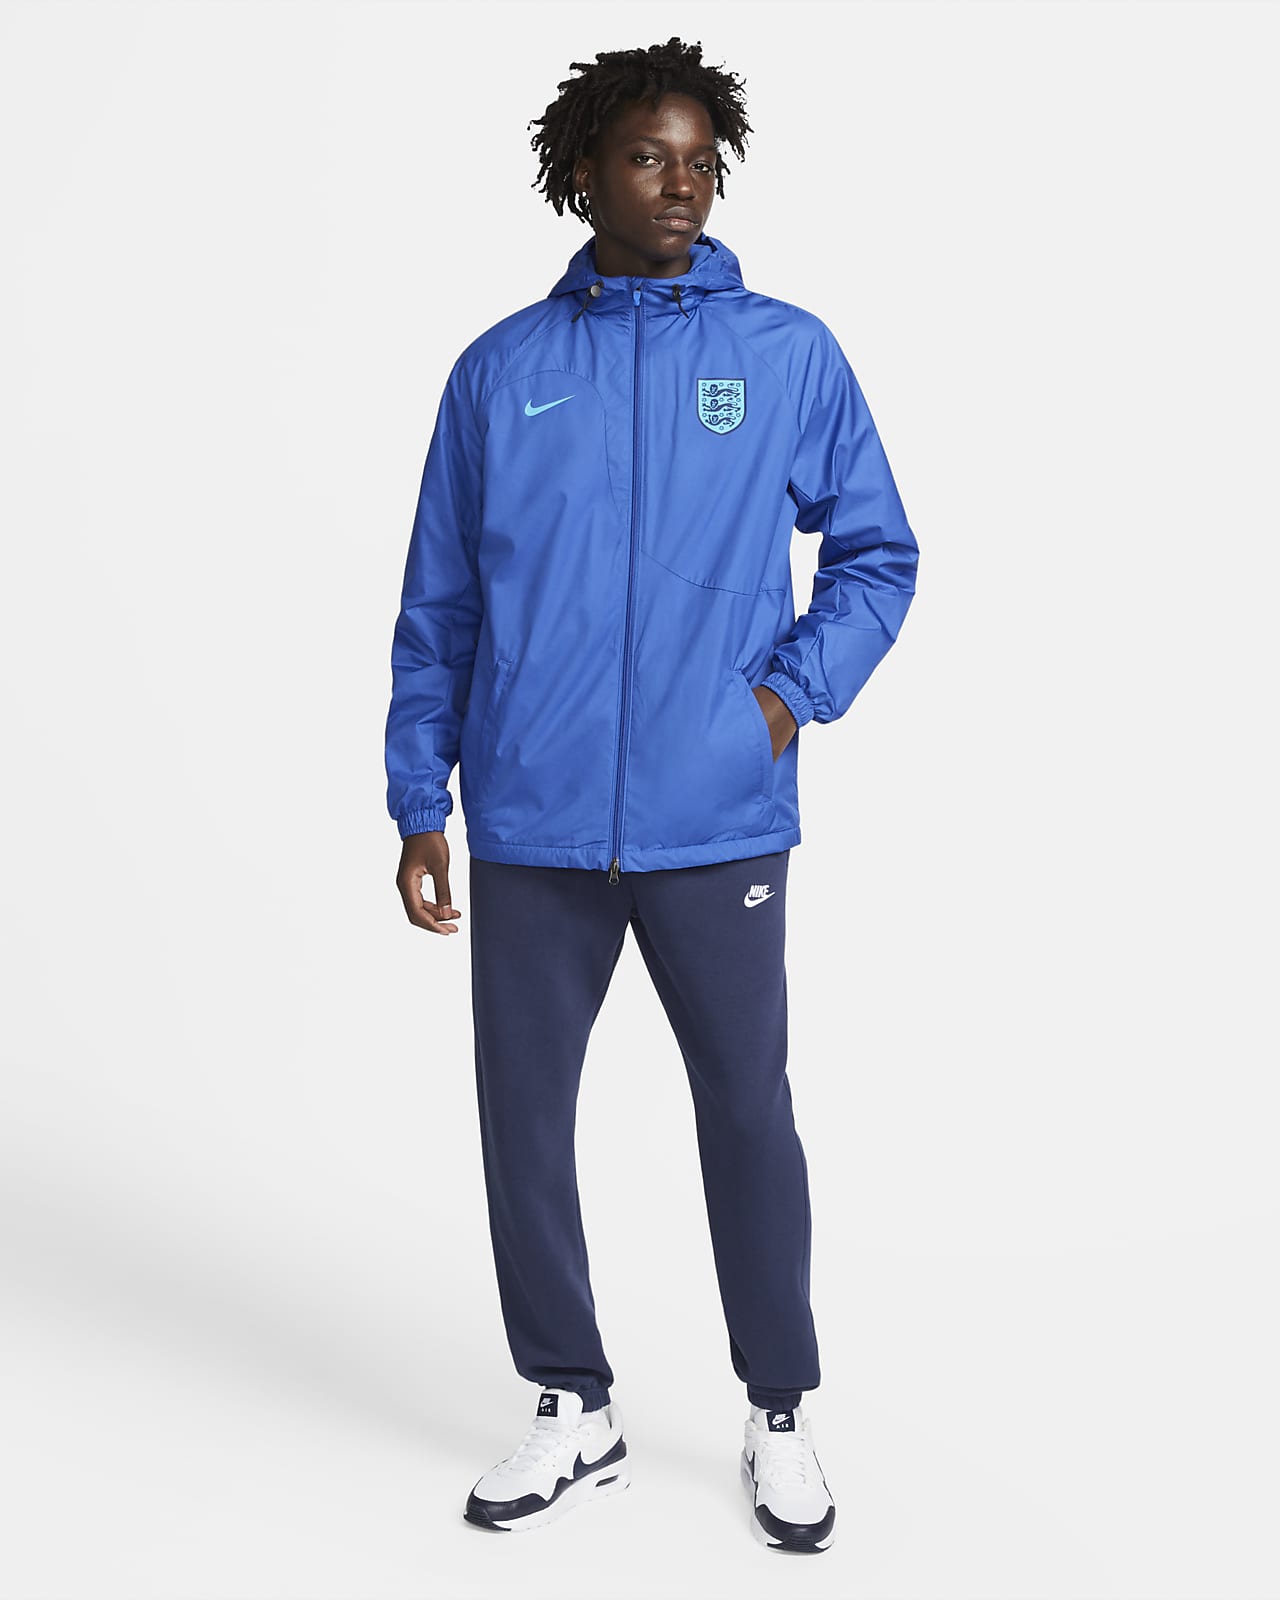 England Strike Men's Nike Dri-FIT Hooded Soccer Track Jacket